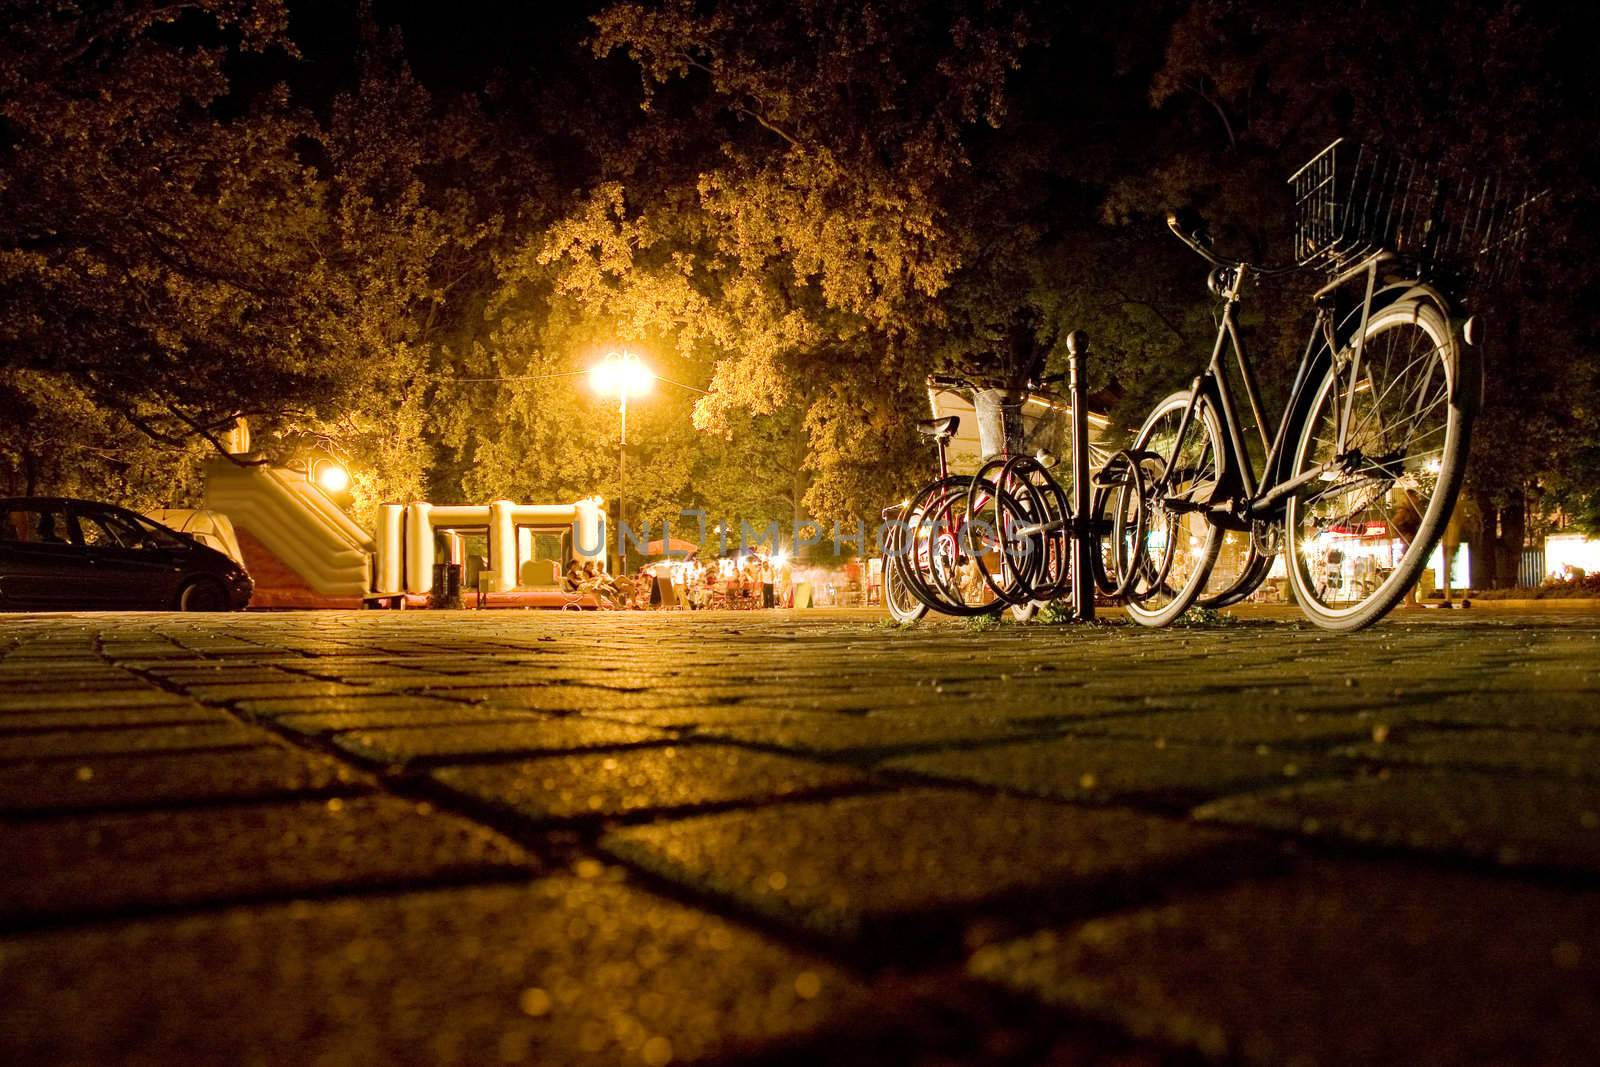 Evening with bike by AlexKhrom